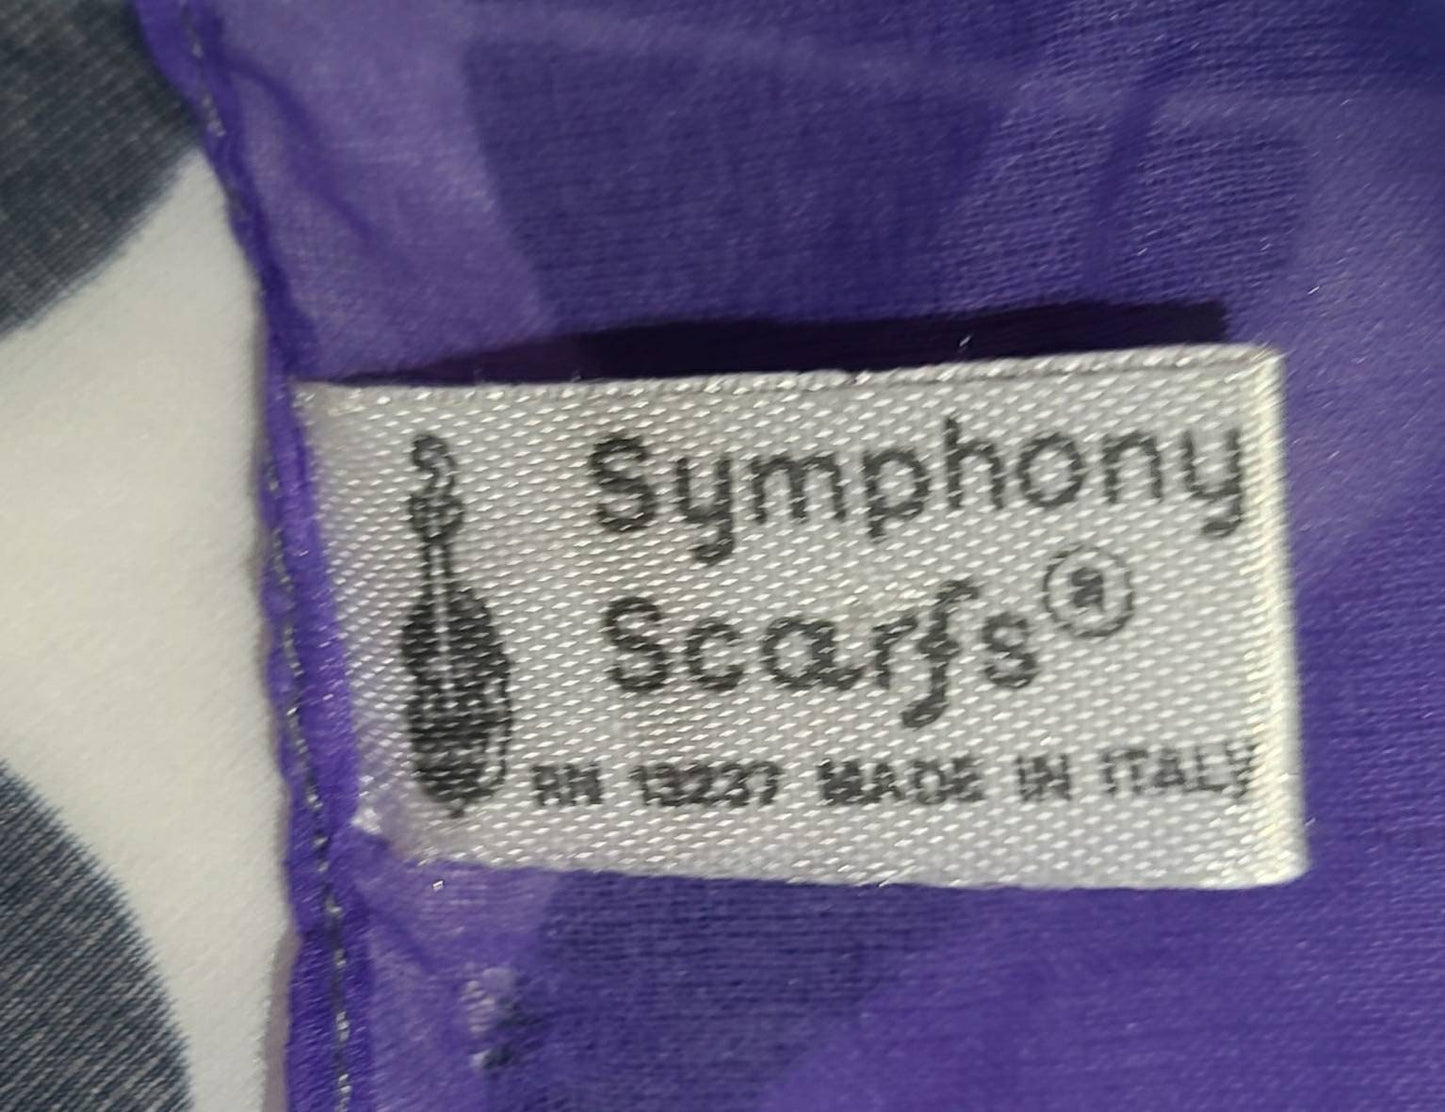 SALE Vintage Silk Scarf 1960s Thin Bright Geometric Op Art Chiffon Scarf Symphony Scarf Made in Italy Mod 30 x 30.5 in.